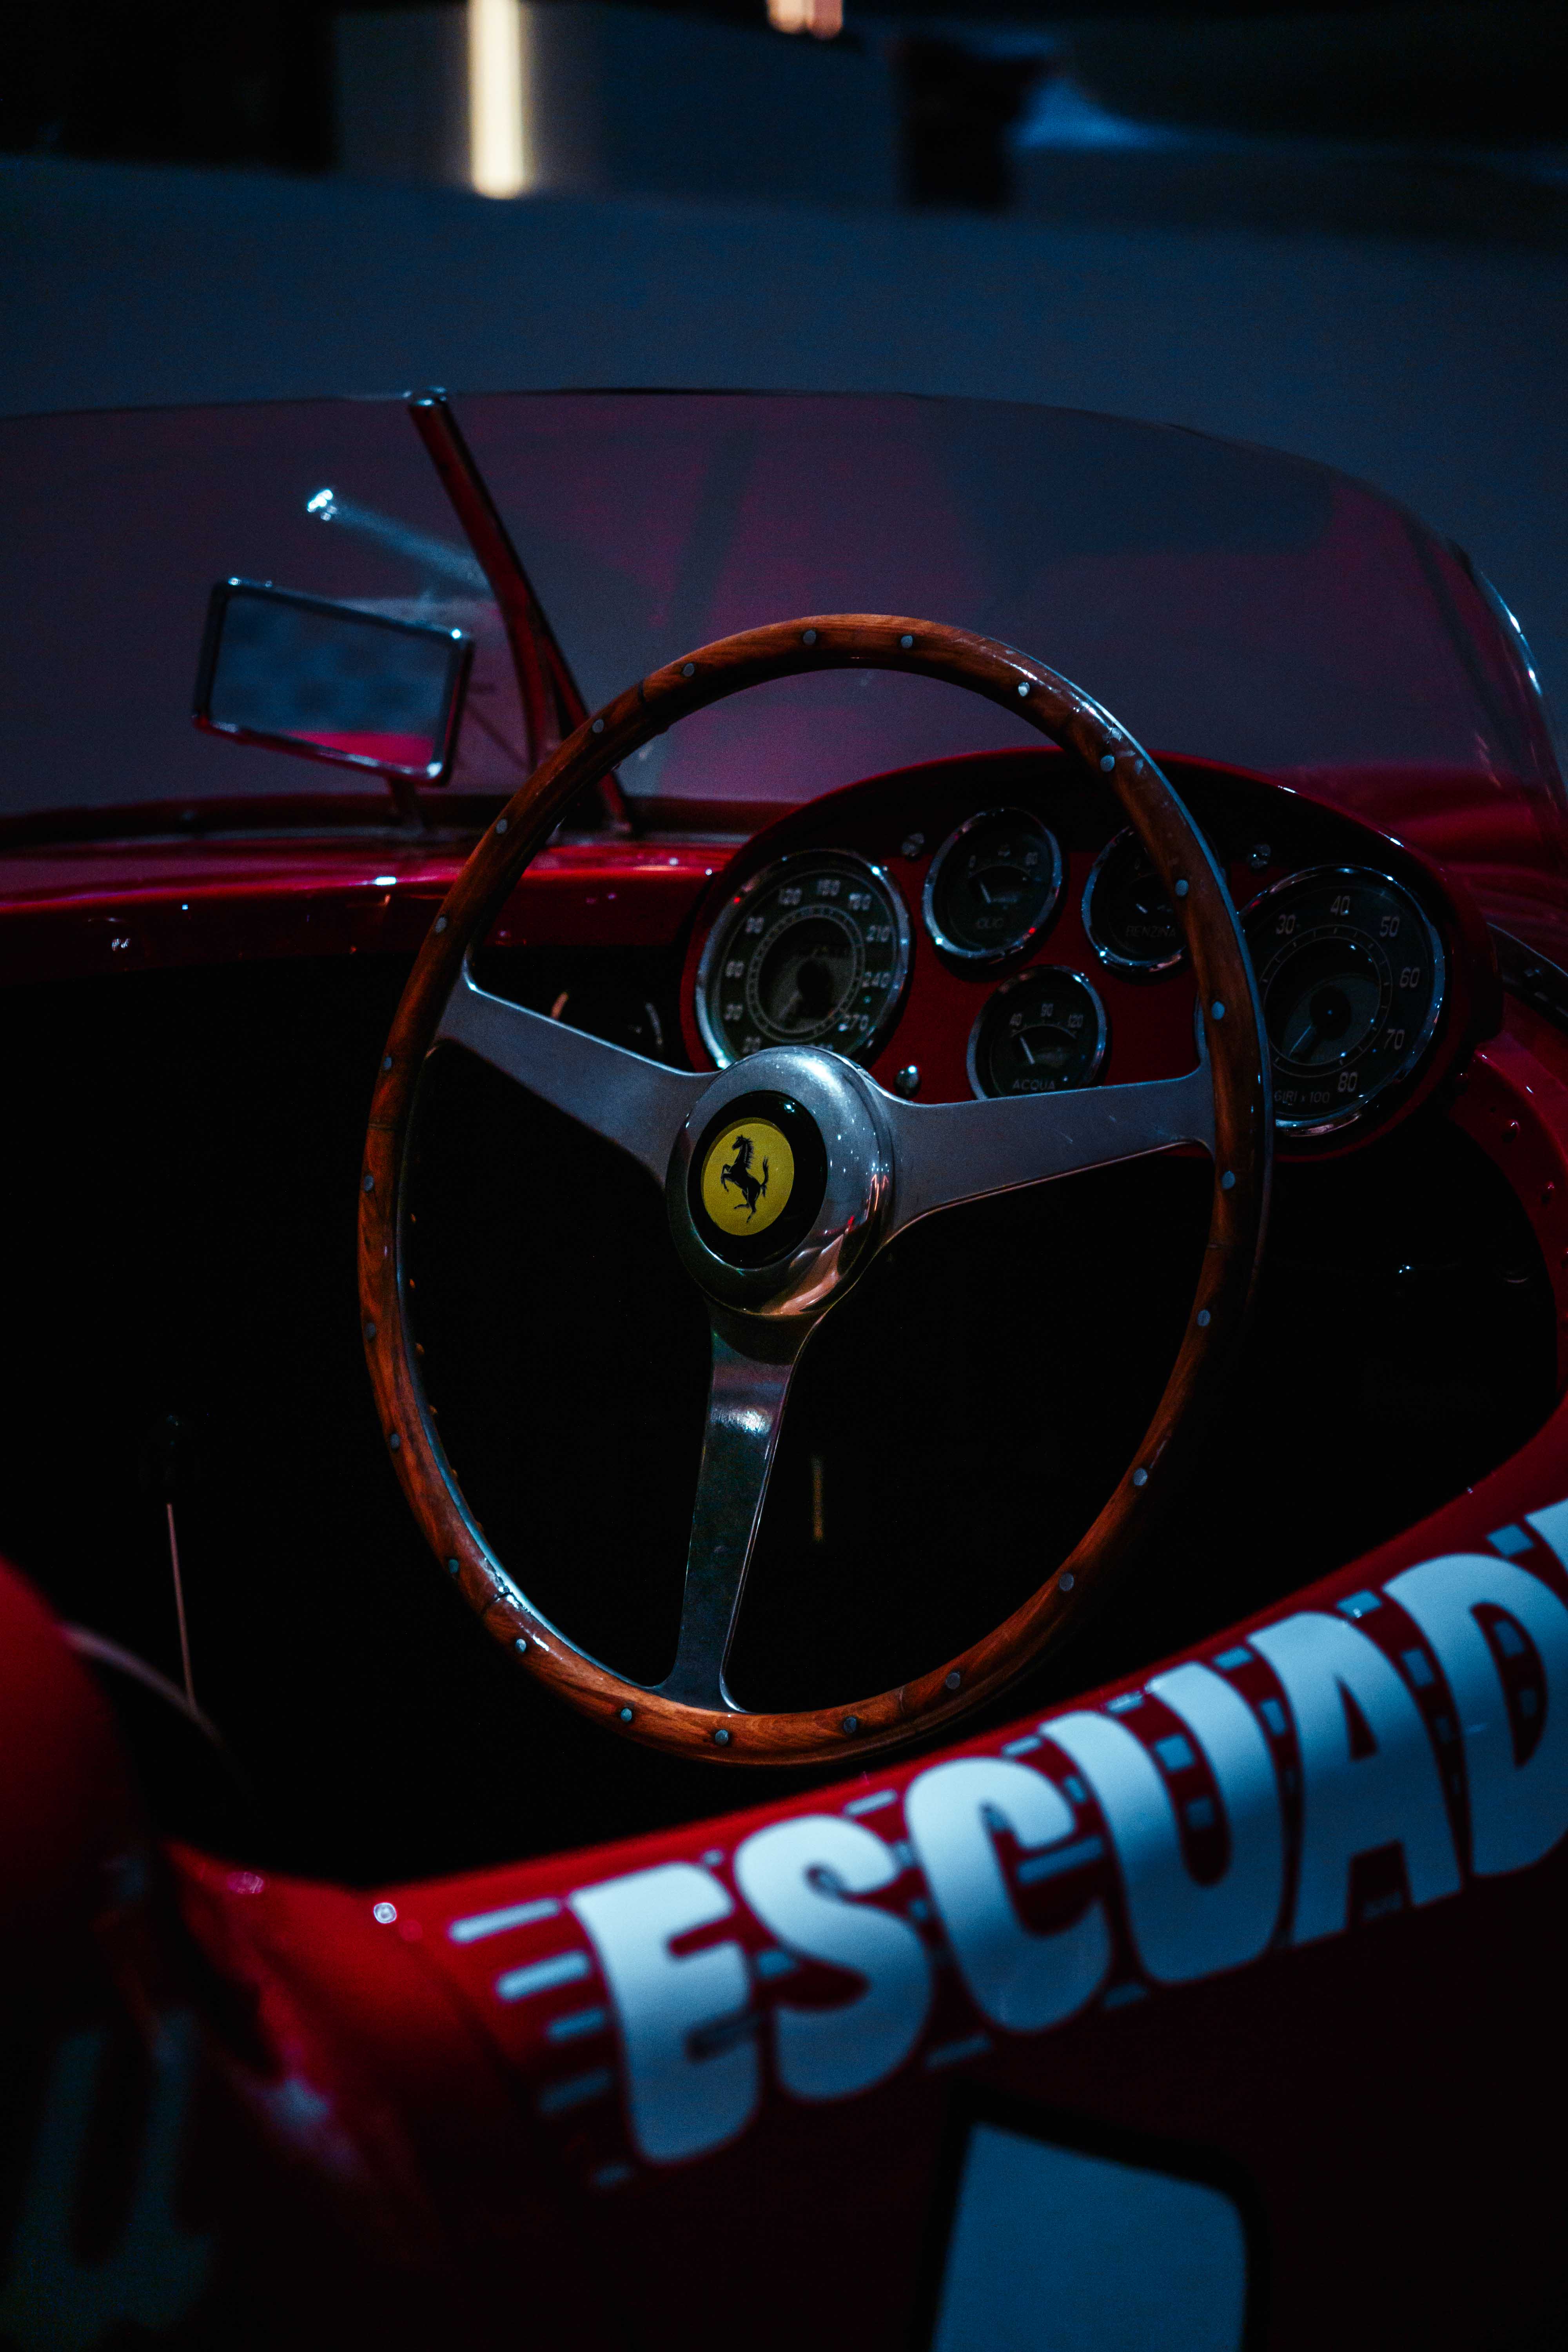 Sterring wheel photo of old racing Ferrari